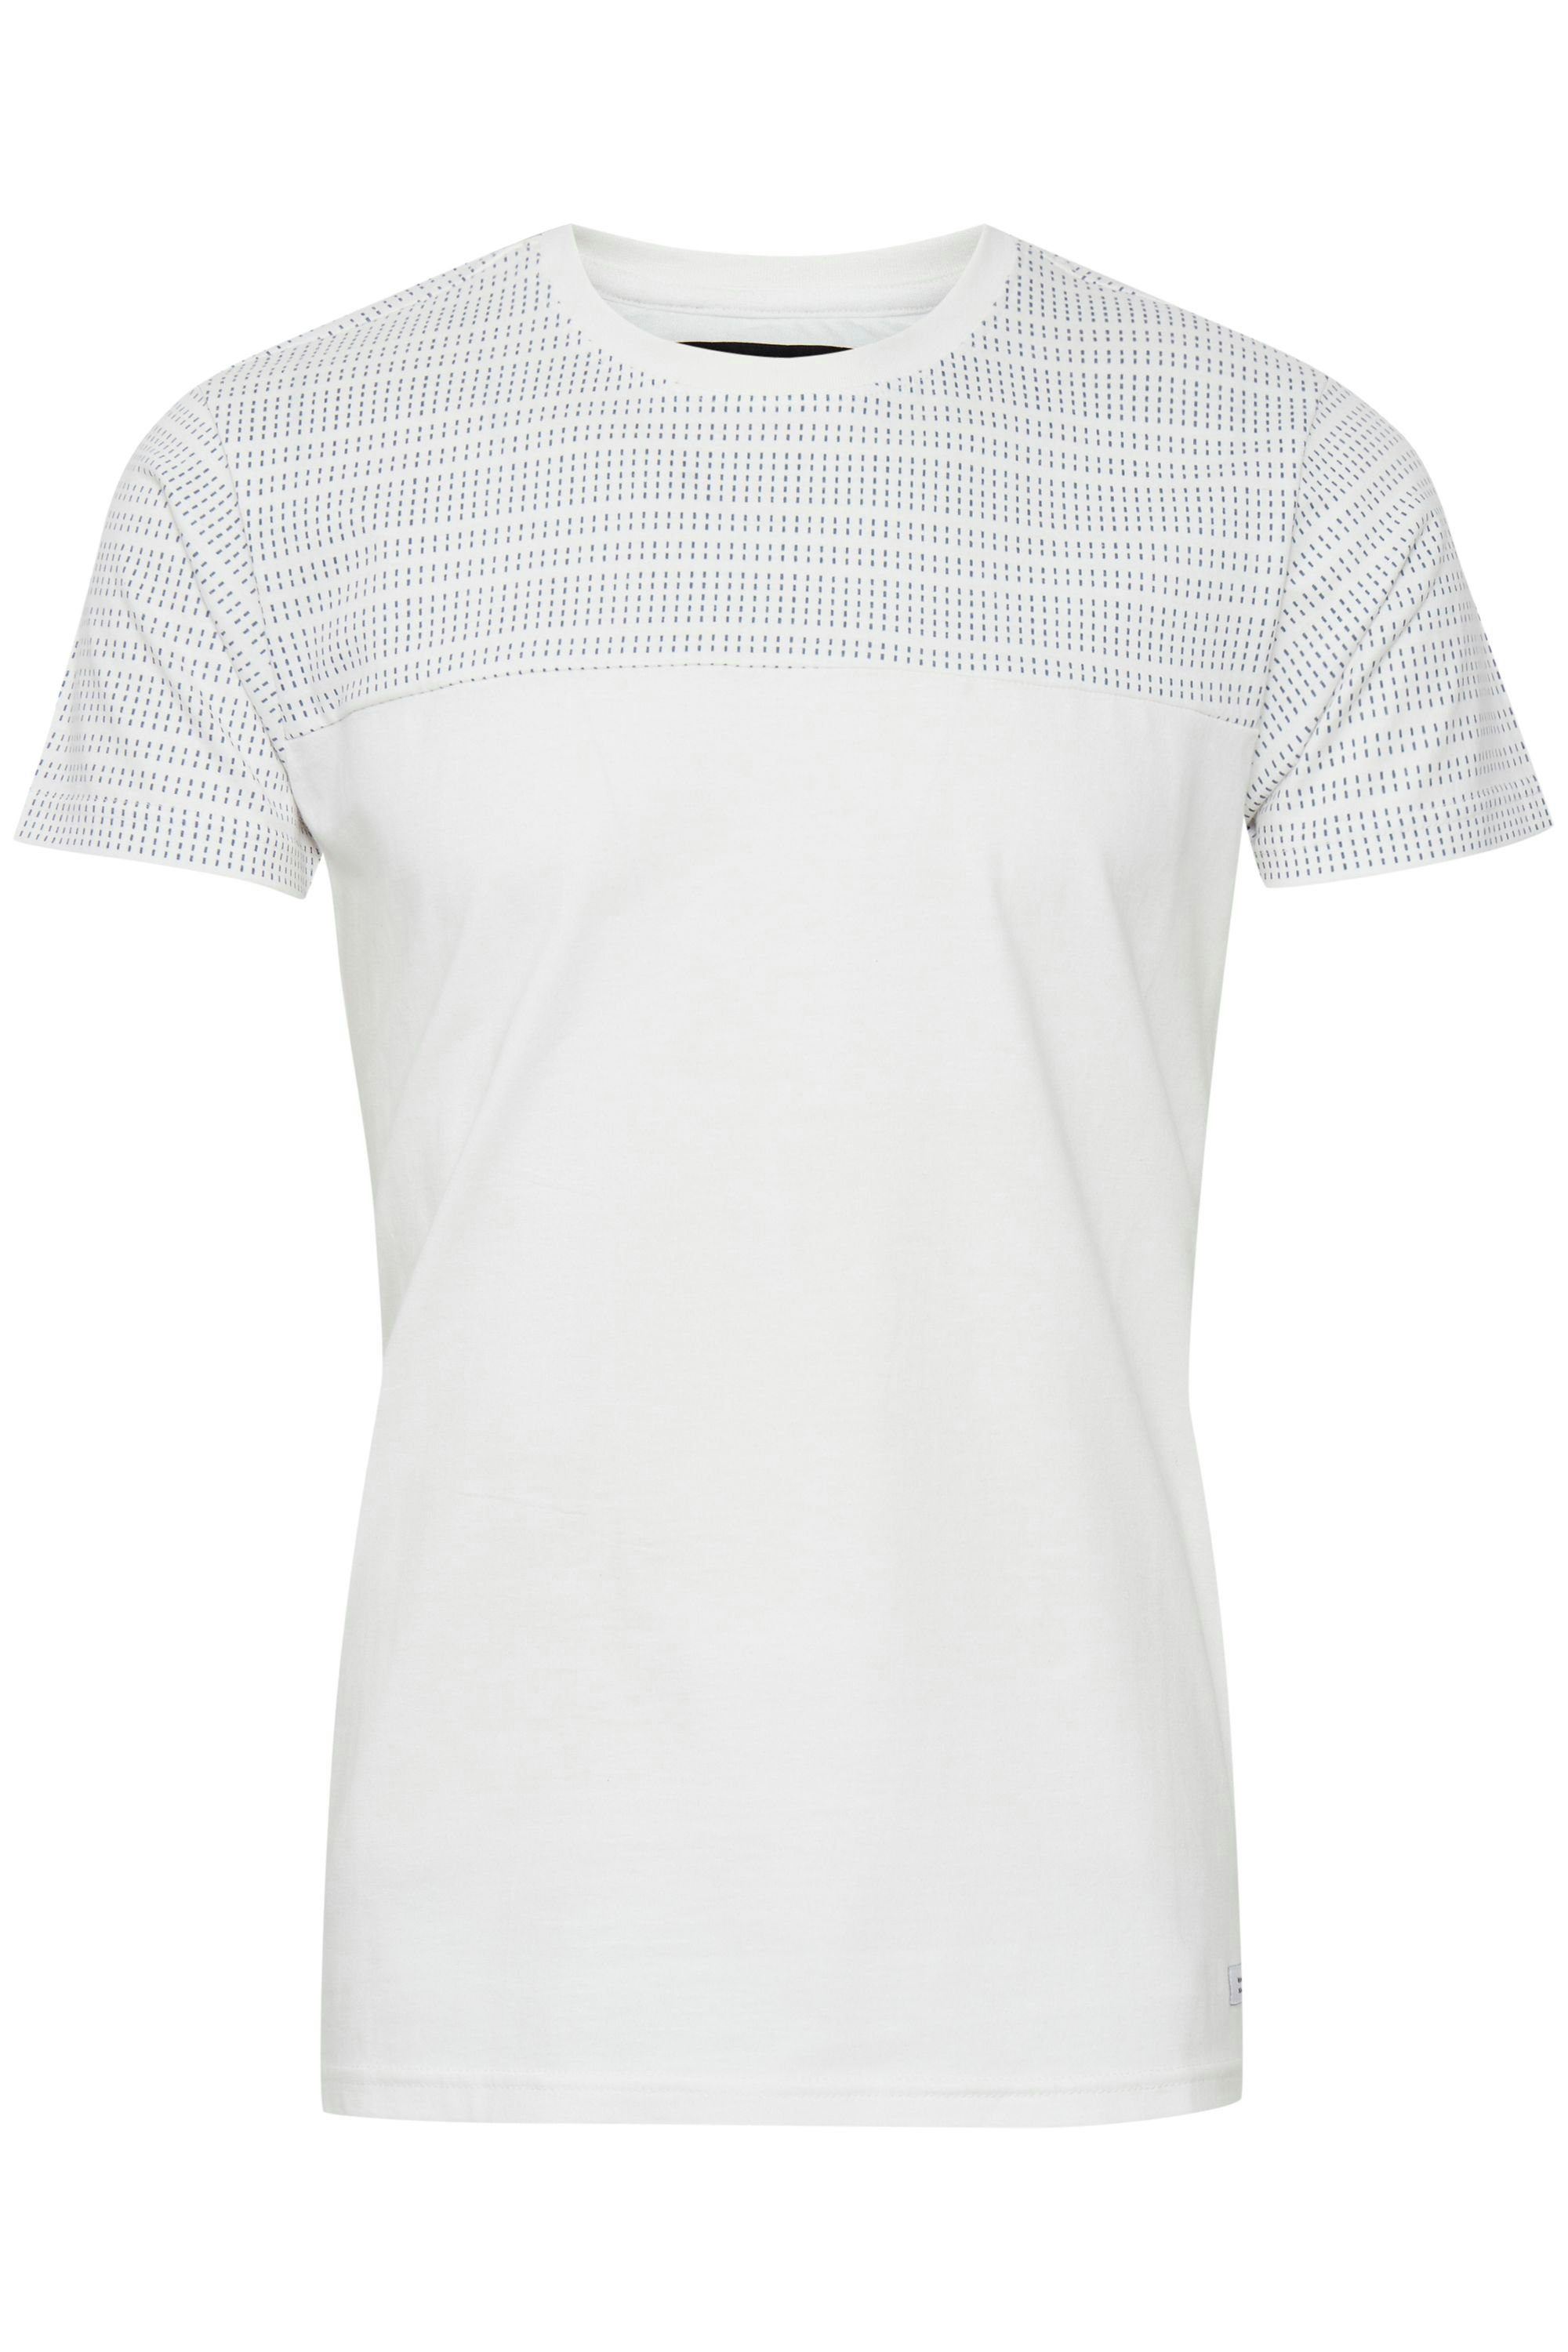 Indicode T-Shirt IDRosto T-Shirt im (002) Off-White Colorblock-Look